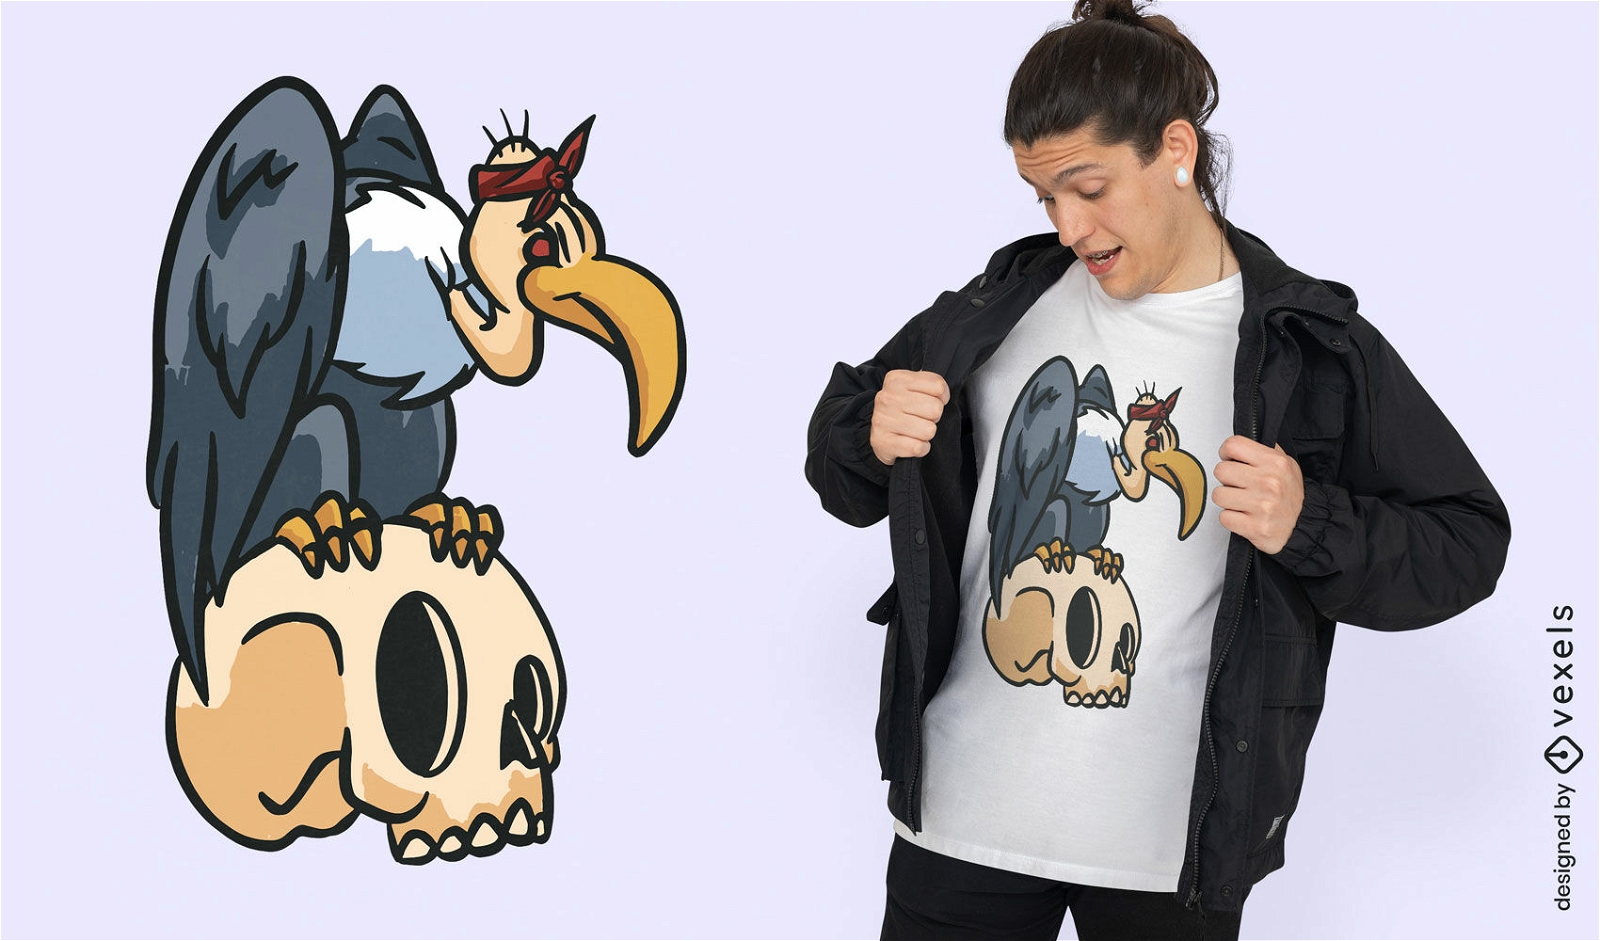 Vulture on a skull t-shirt design